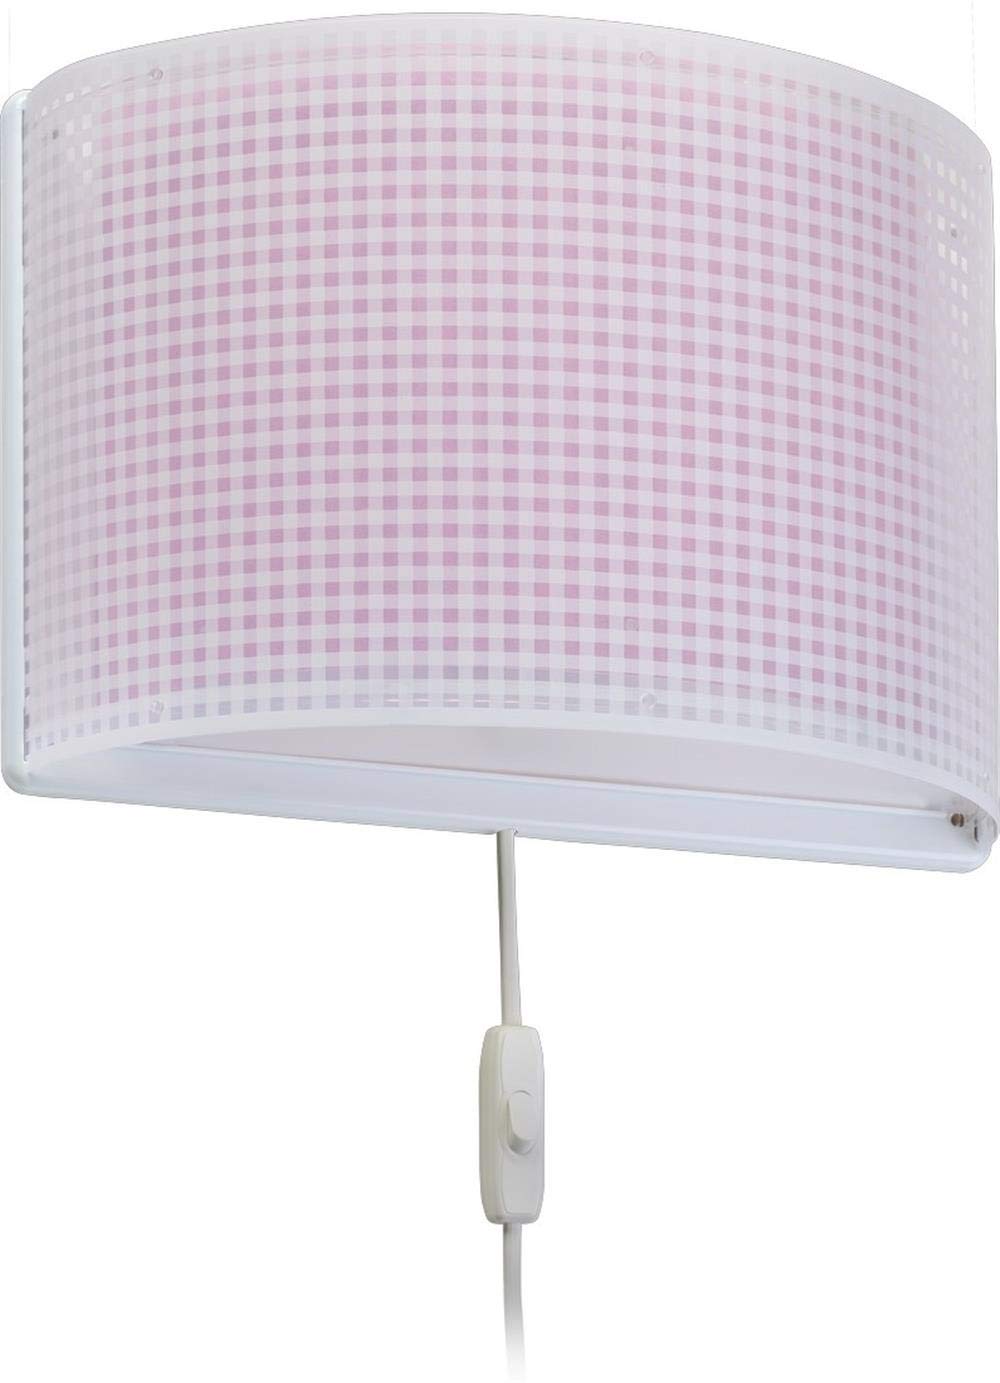 Dalber 60 W Vichy Pink Plastic Wall Light